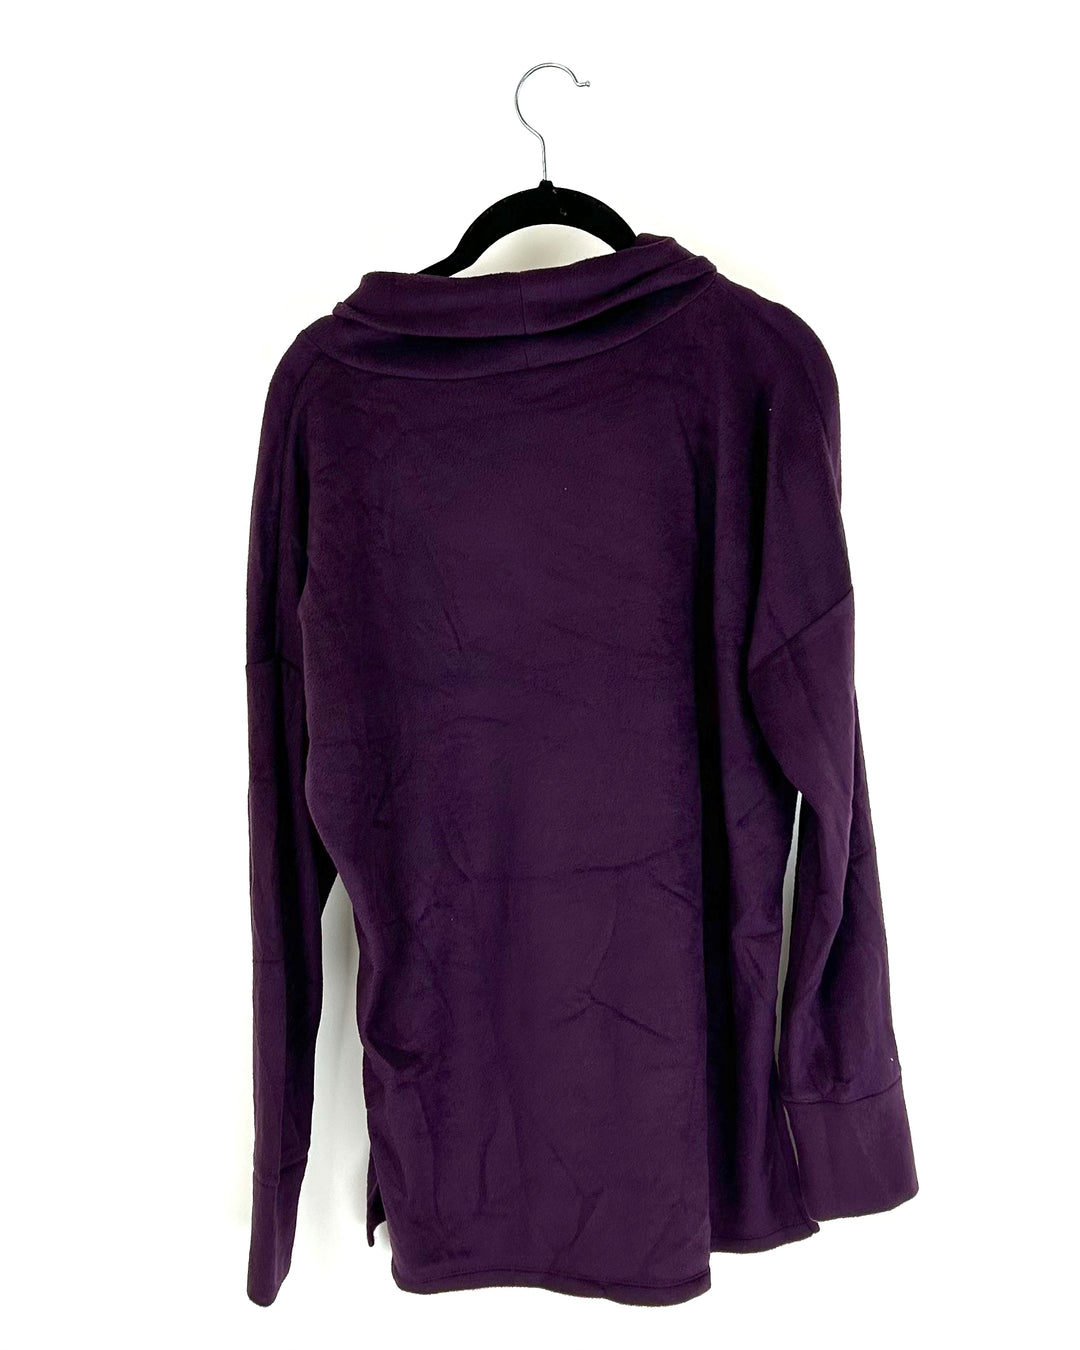 Purple  Fleece Turtle Neck Long Sleeve Top - Size 6/8